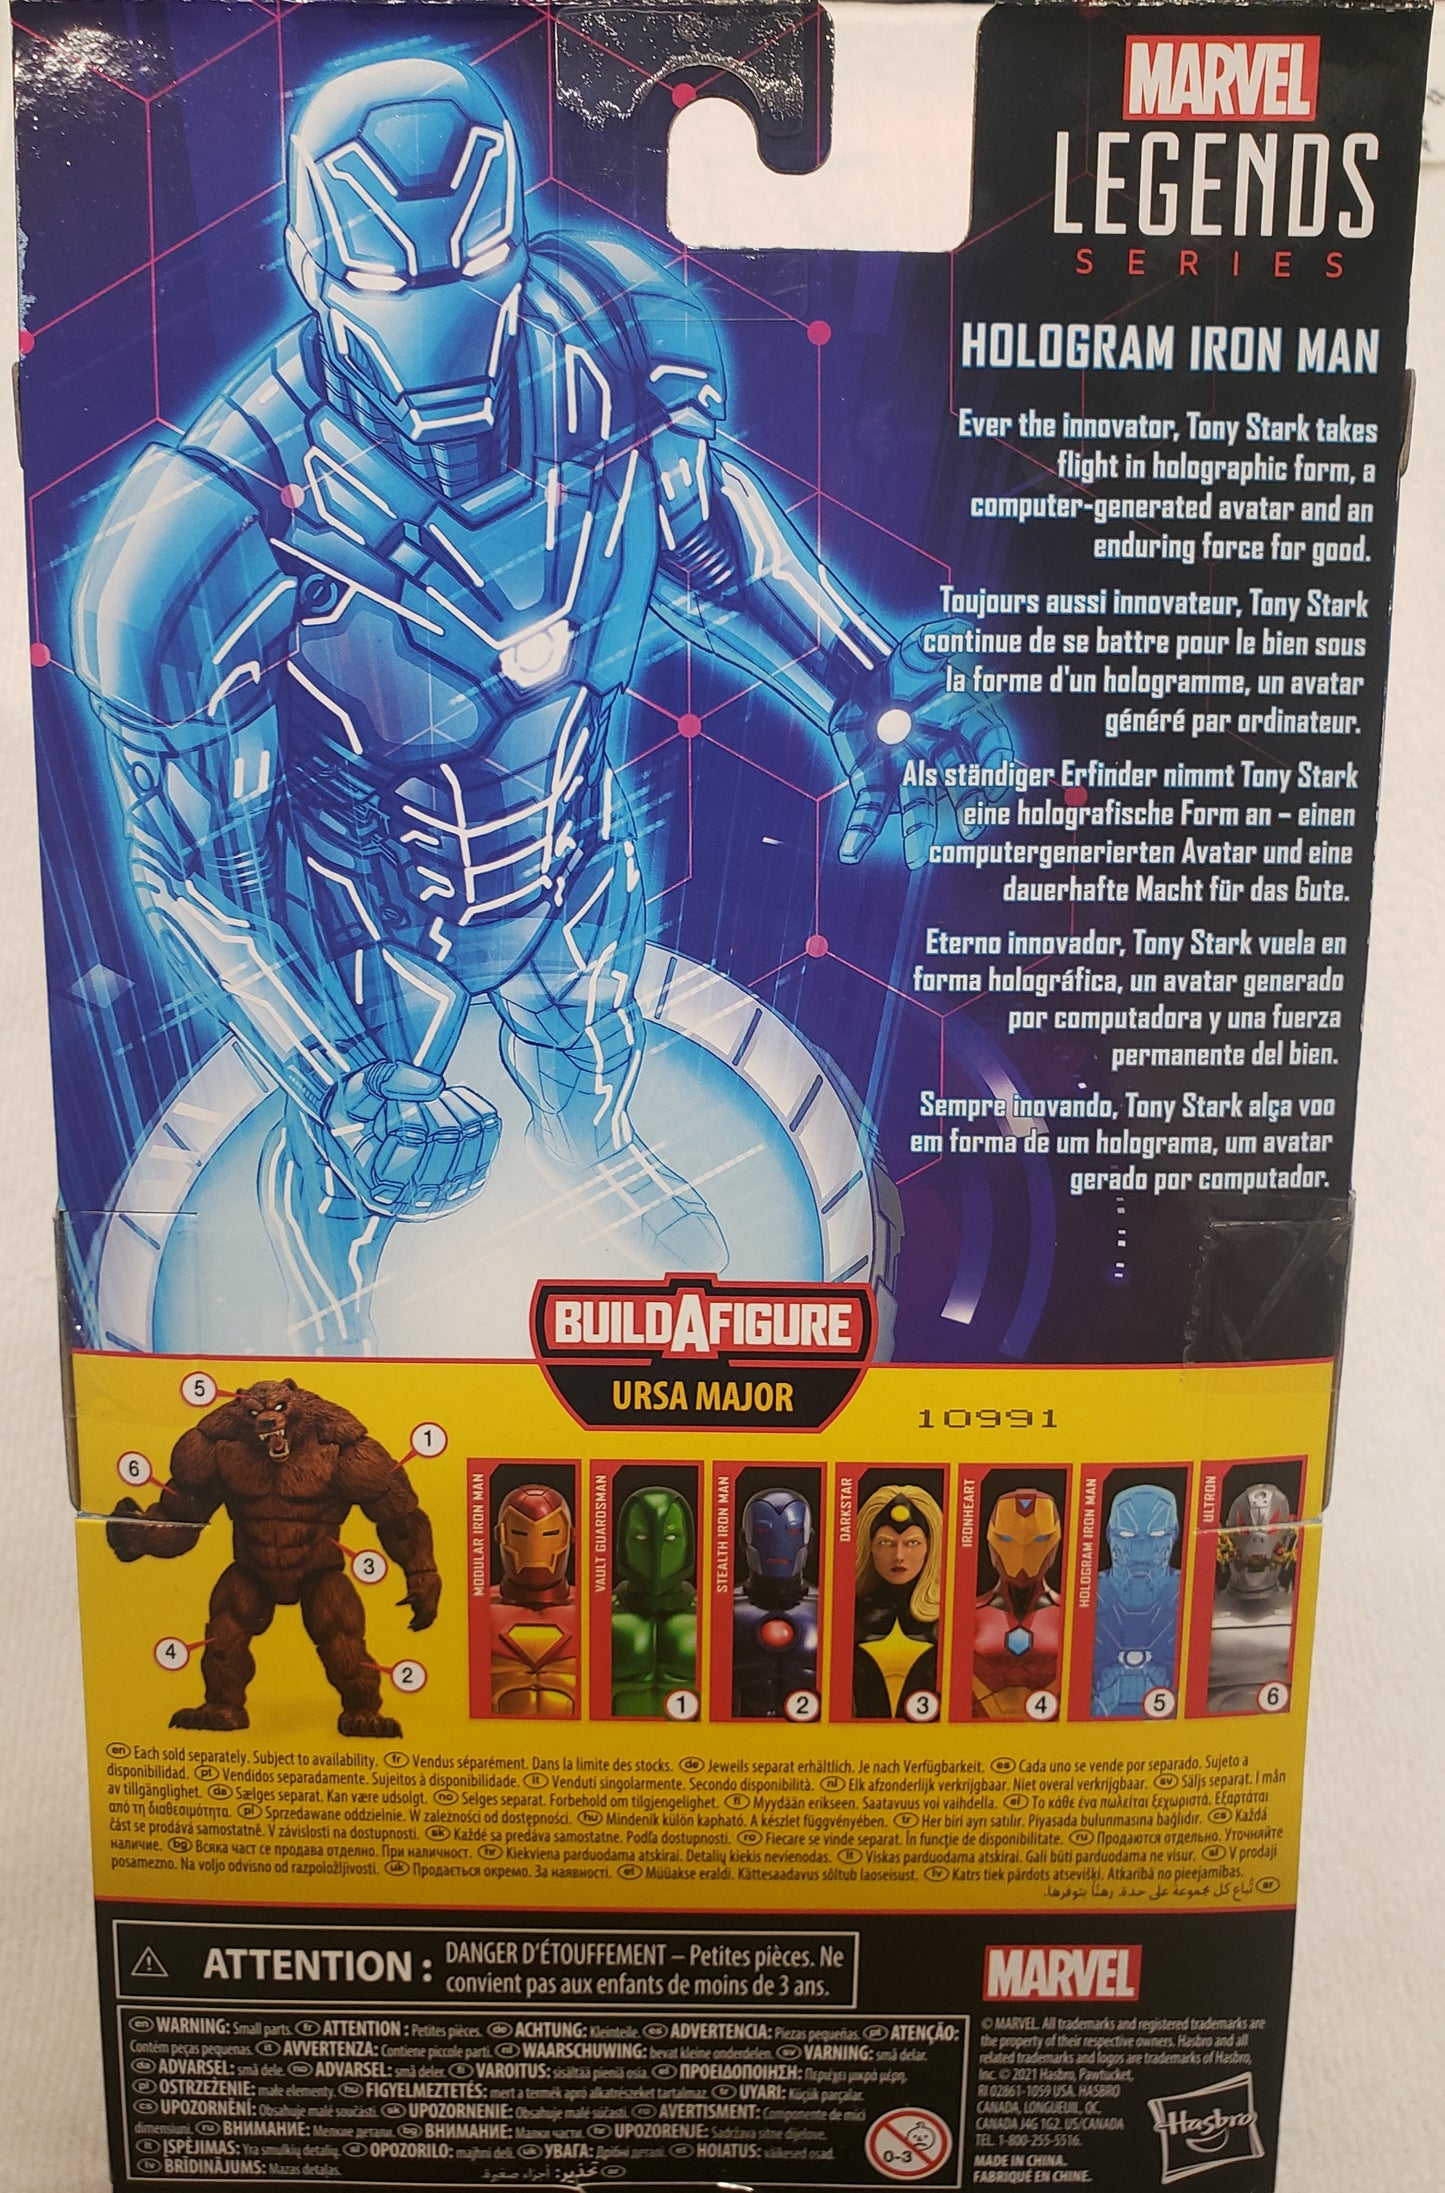 Marvel Legends Iron Man: Hologram Iron Man